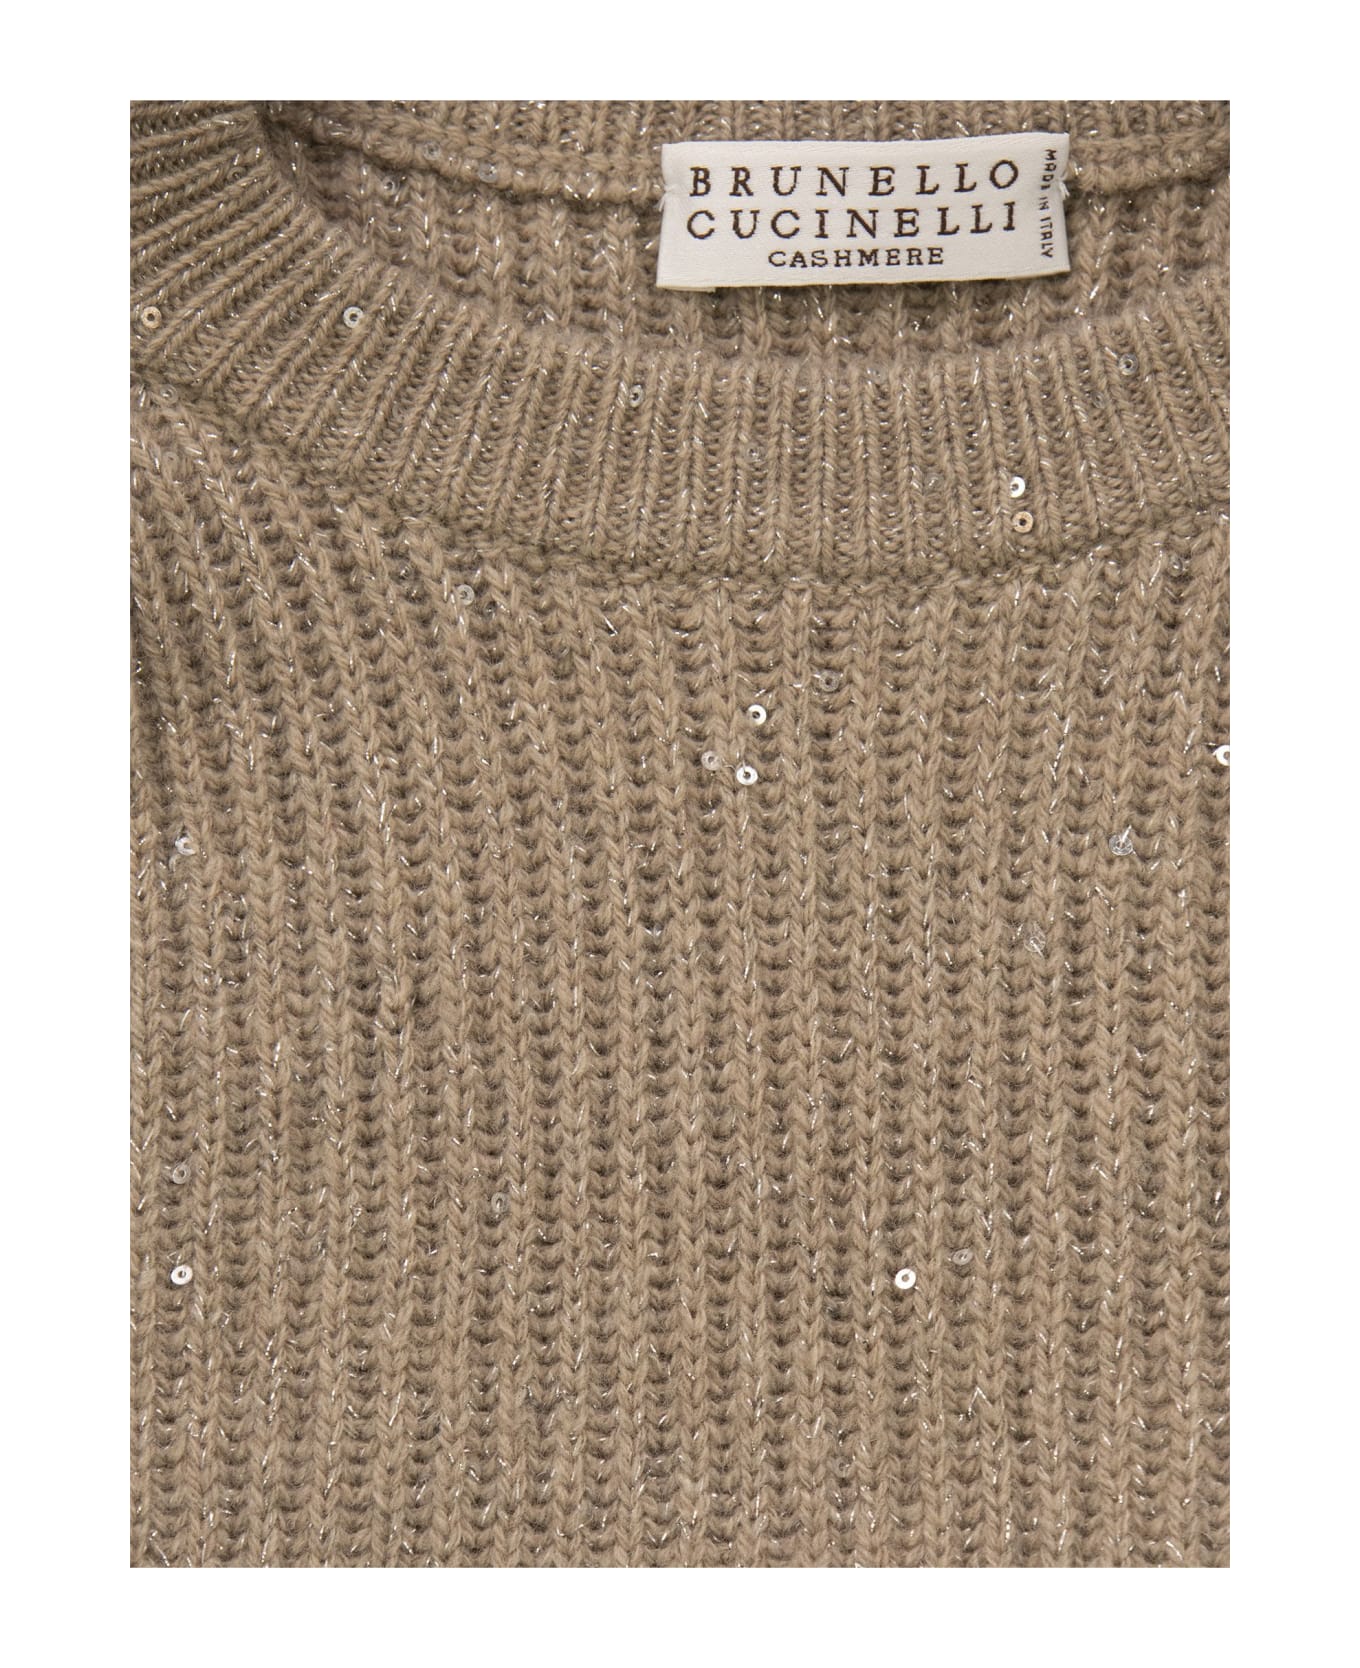 Brunello Cucinelli Cashmere And Wool Blend Sweater - Walnut